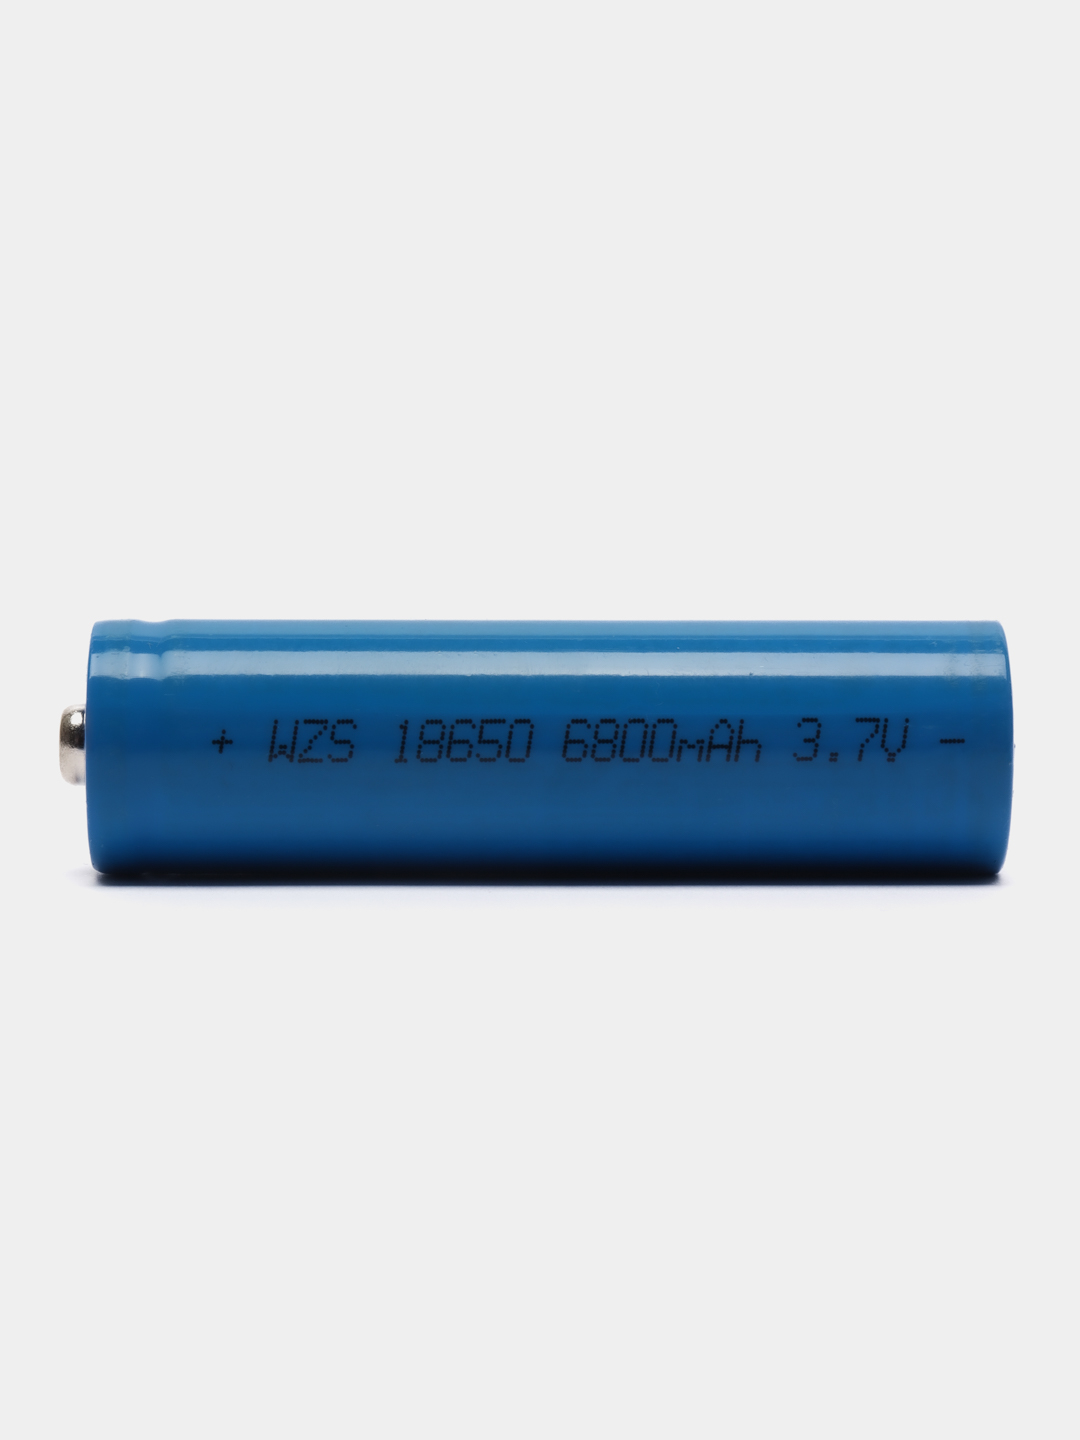 Аккумулятор 18650 для фонарика, литиевая батарейка, 6800 mAh акб для .